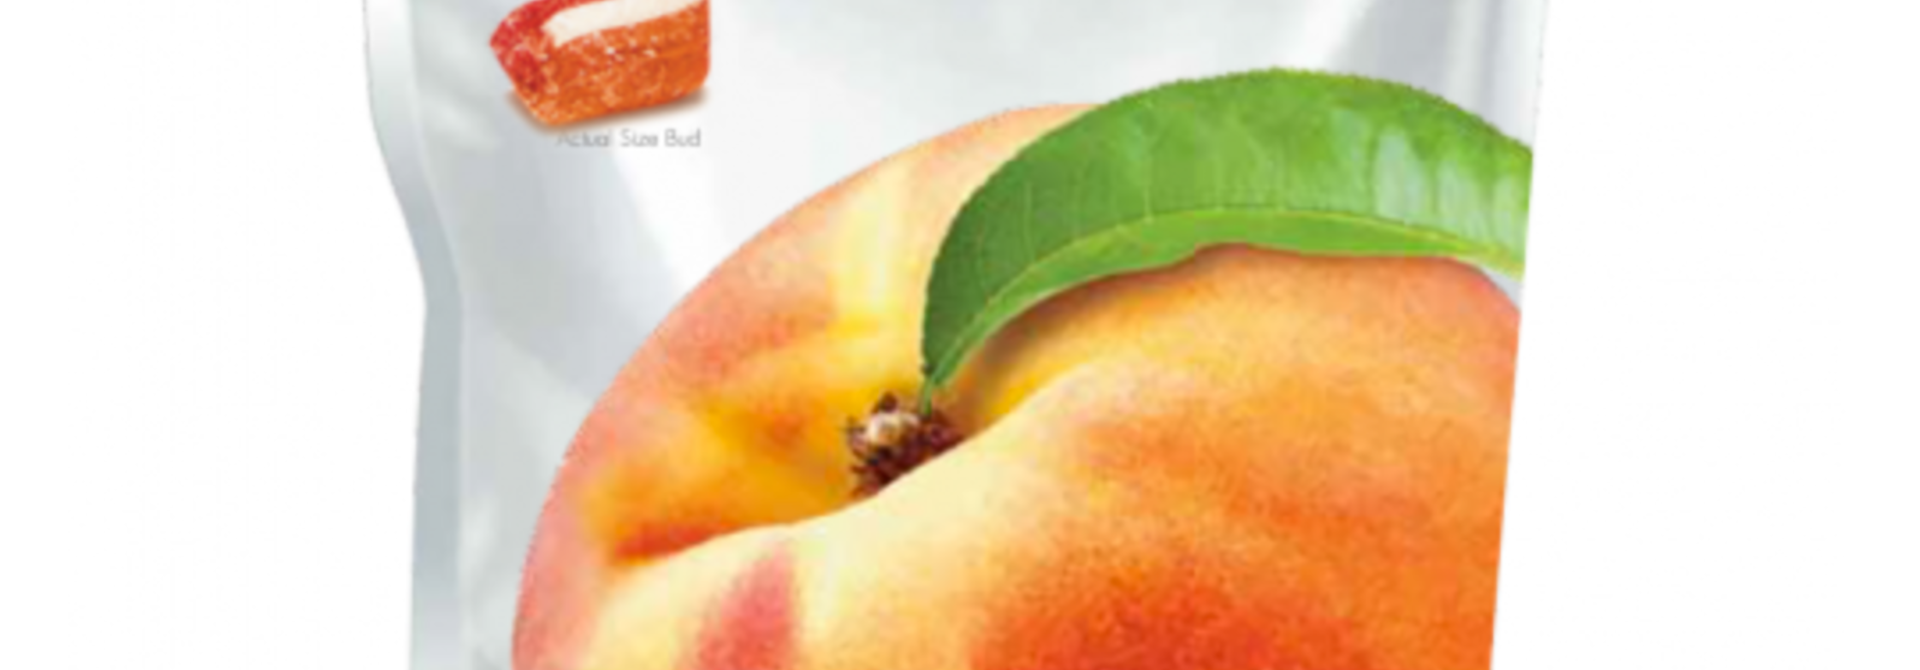 Peach Buds Hard Candy 2.5 oz